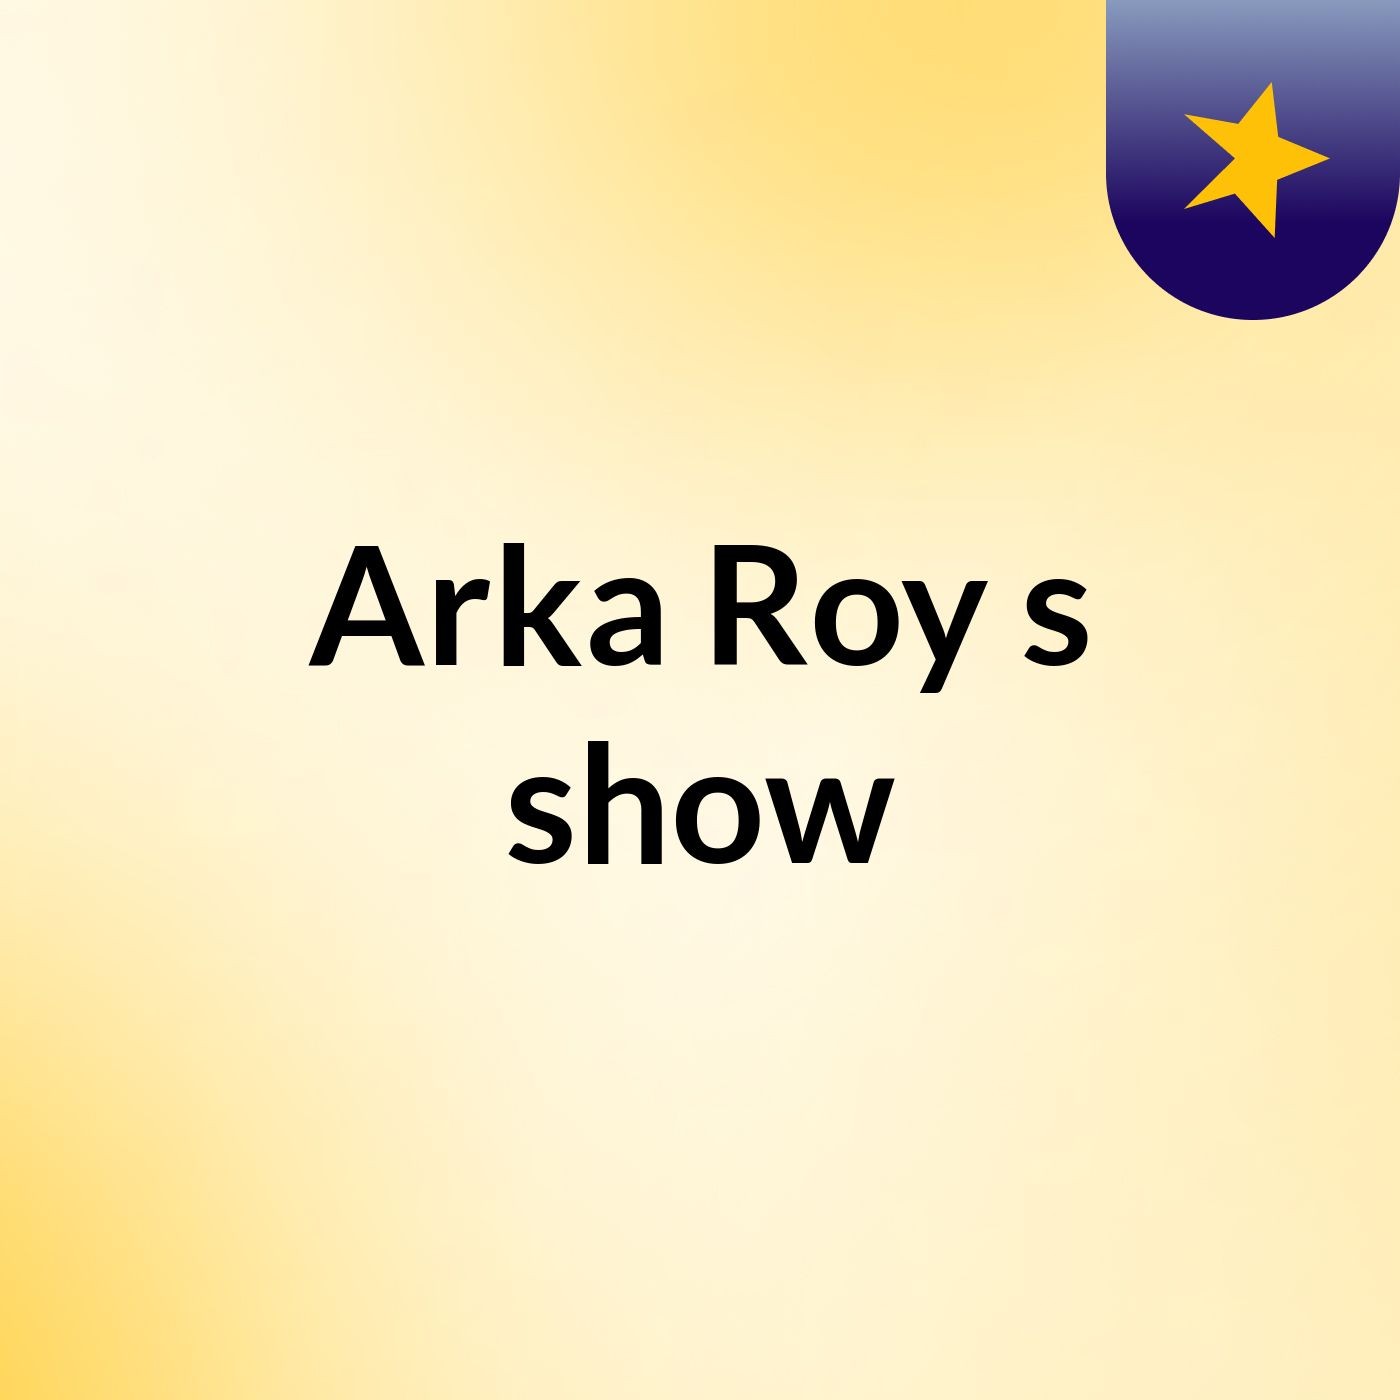 Arka Roy's show